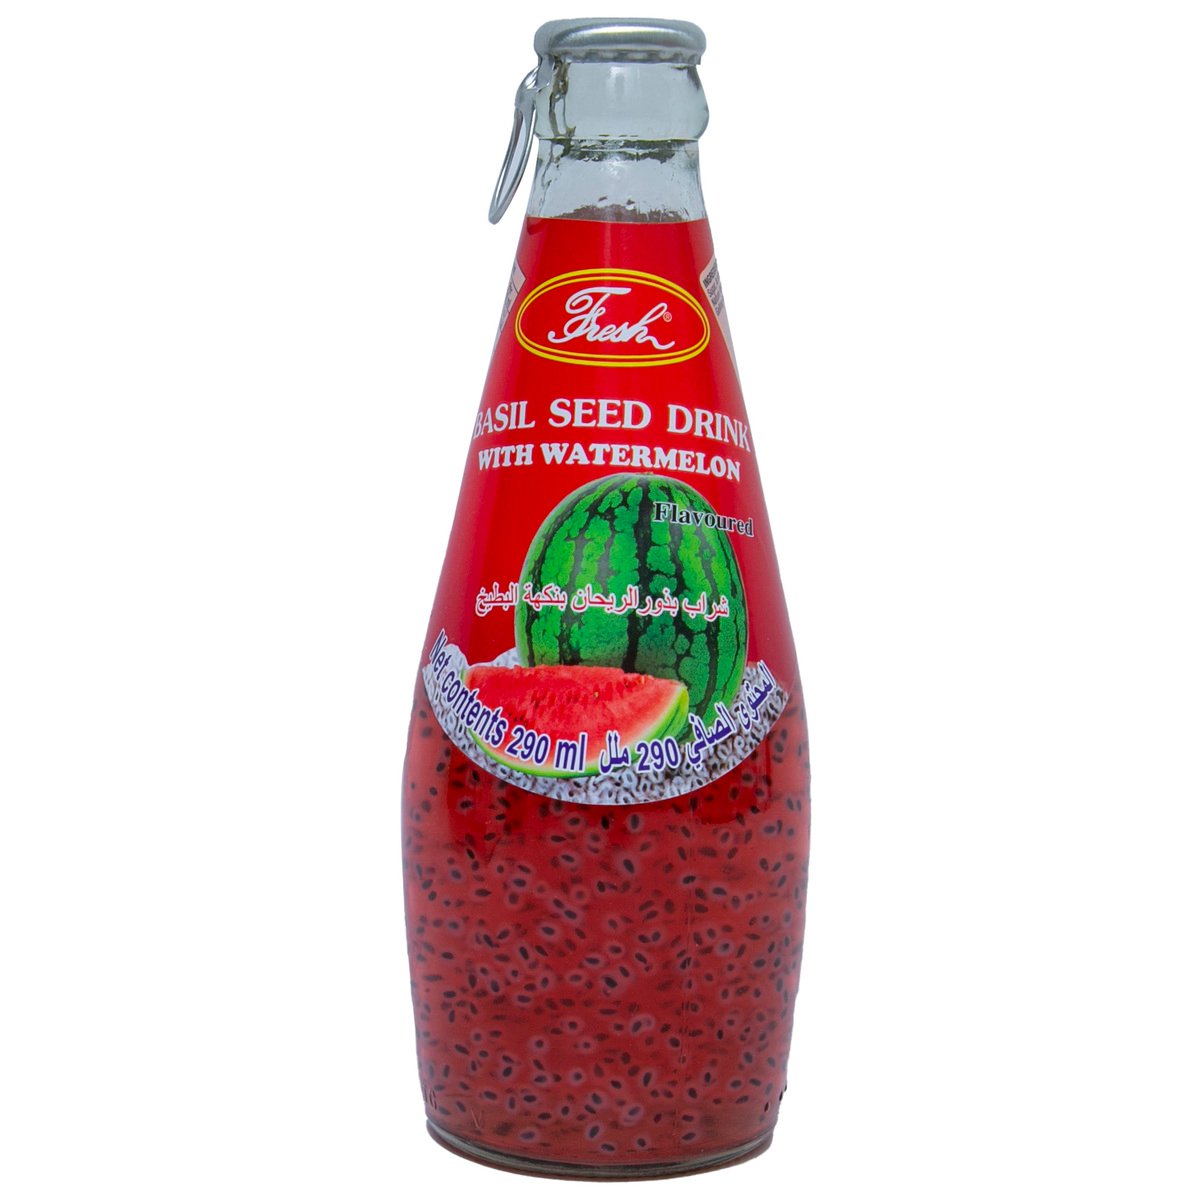 Fresh Basil Seed Drink With Watermelon 290 ml